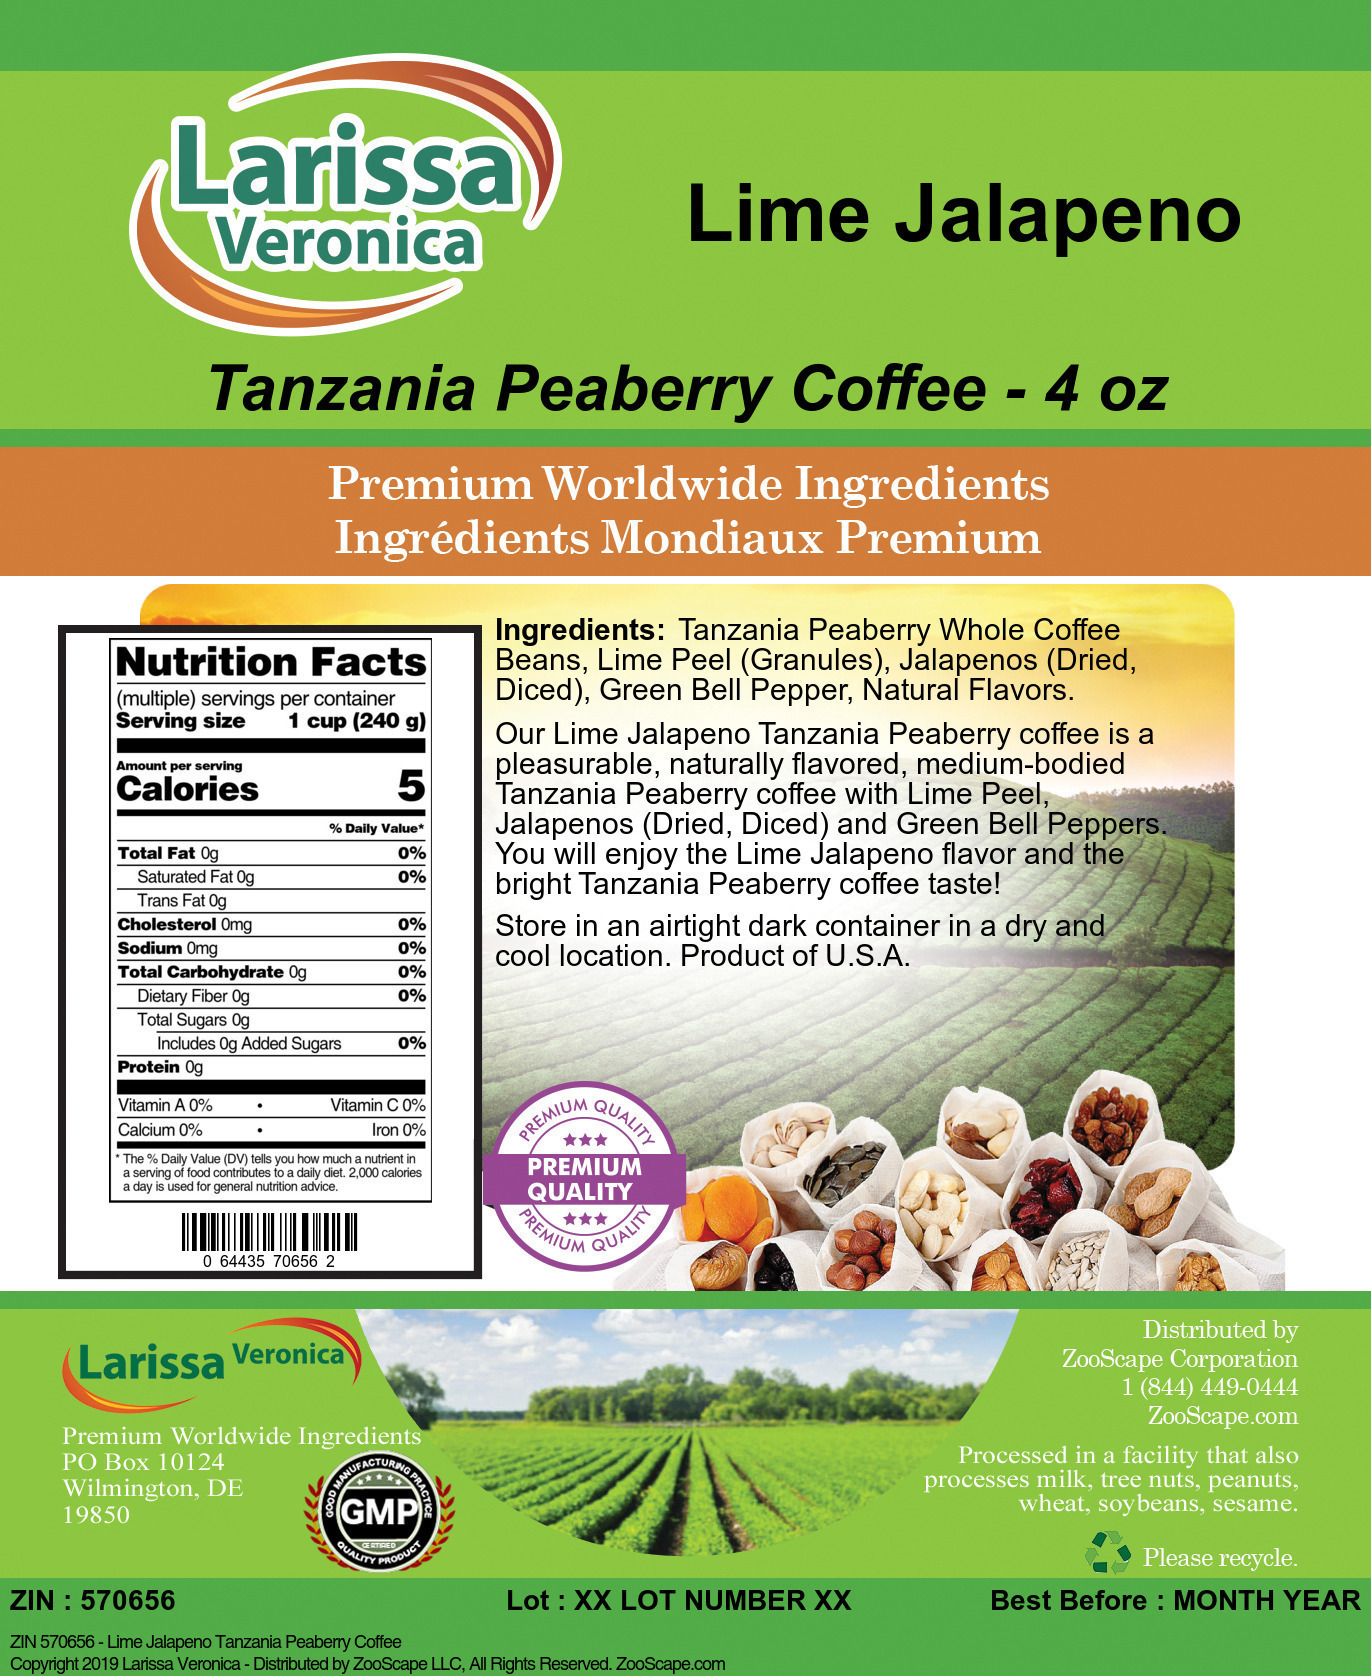 Lime Jalapeno Tanzania Peaberry Coffee - Label